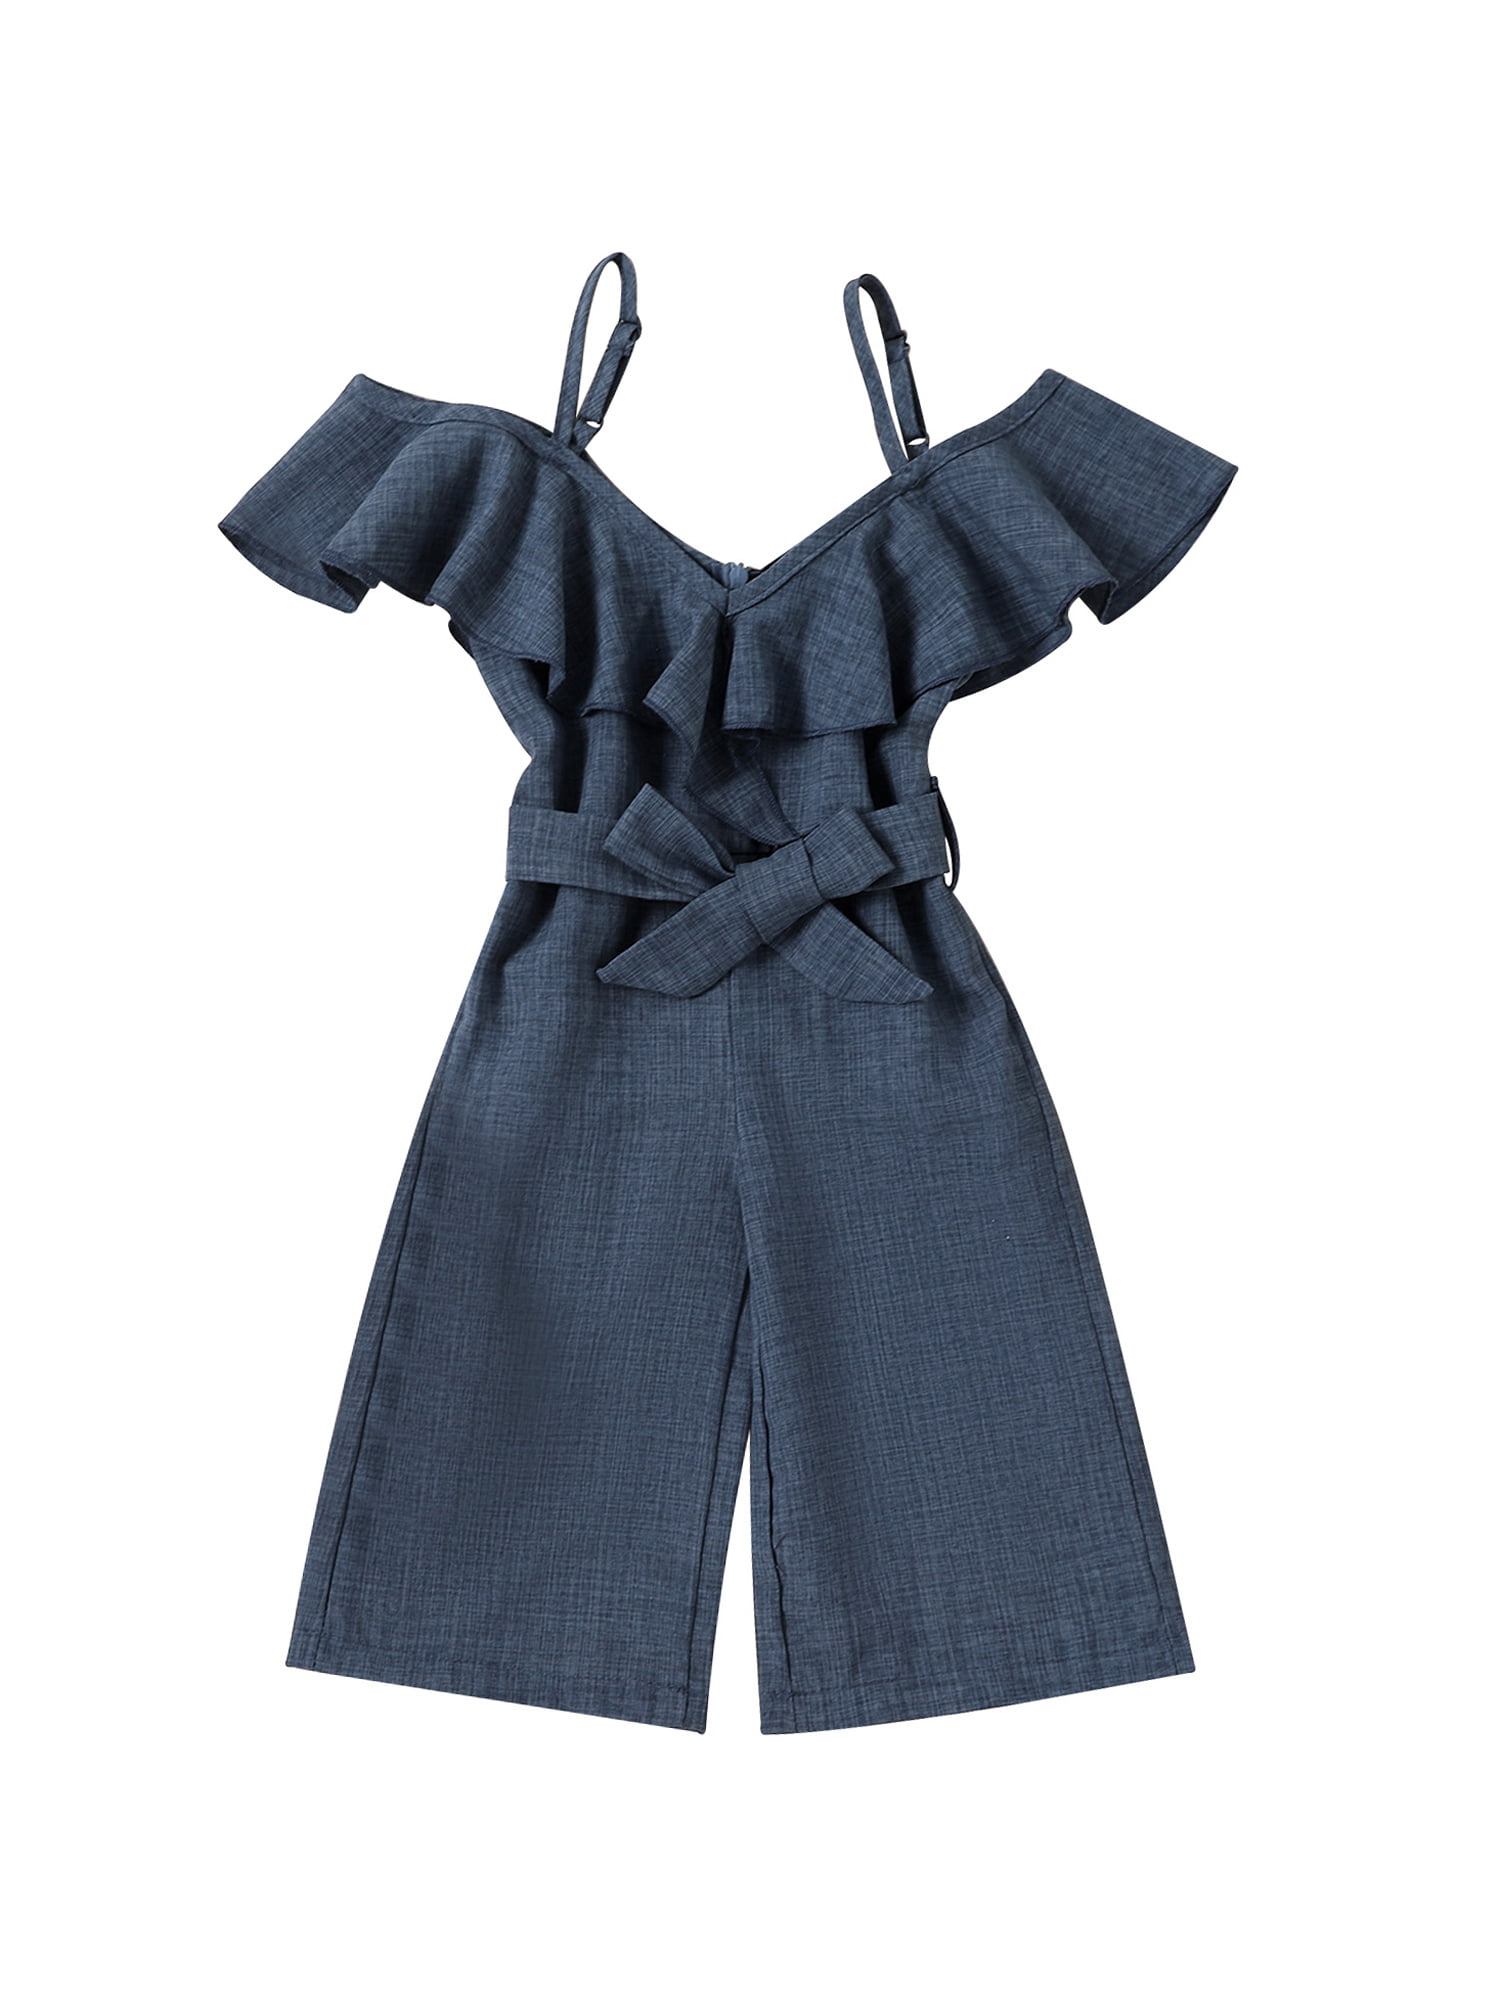 Toddler Baby Kids Girls Stripe Romper Strap Pants Overalls Ruffle Jumpsuit USA 